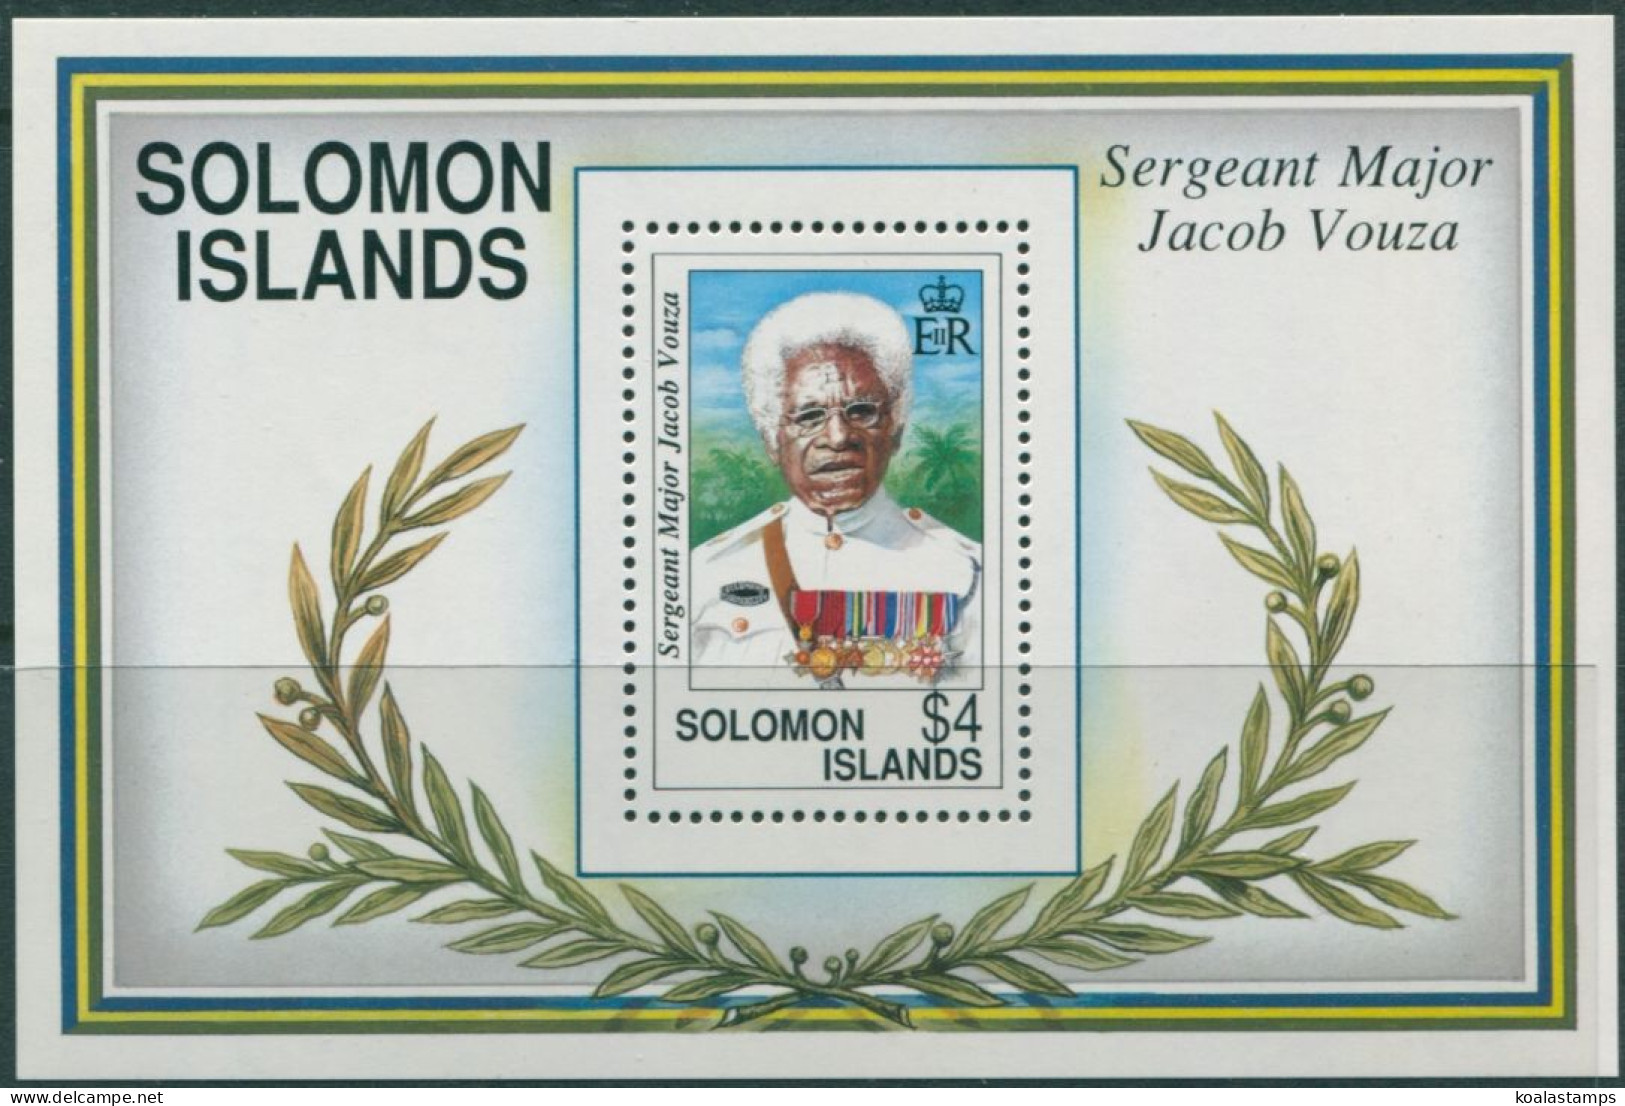 Solomon Islands 1992 SG727 WWII Jacob Vouza MS MNH - Salomoninseln (Salomonen 1978-...)